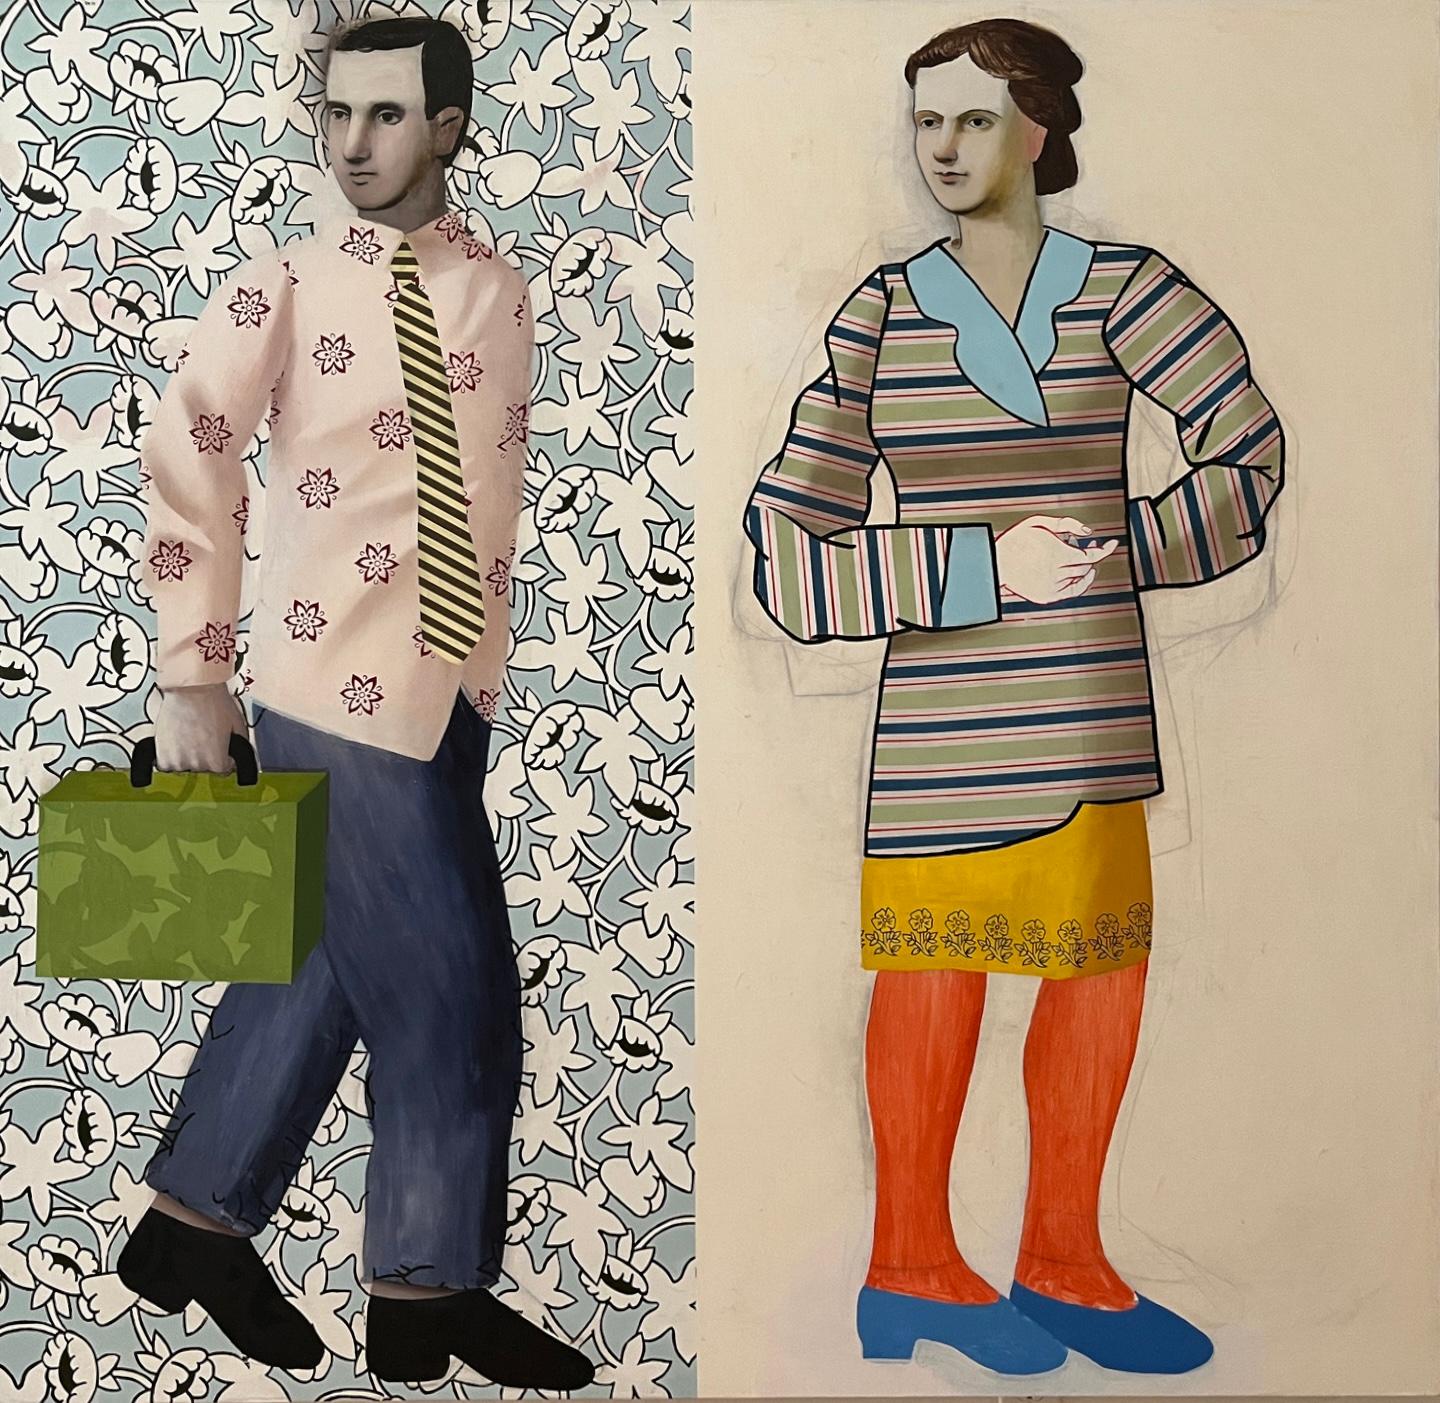 Brian Novatny Figurative Painting - A Man and A Woman